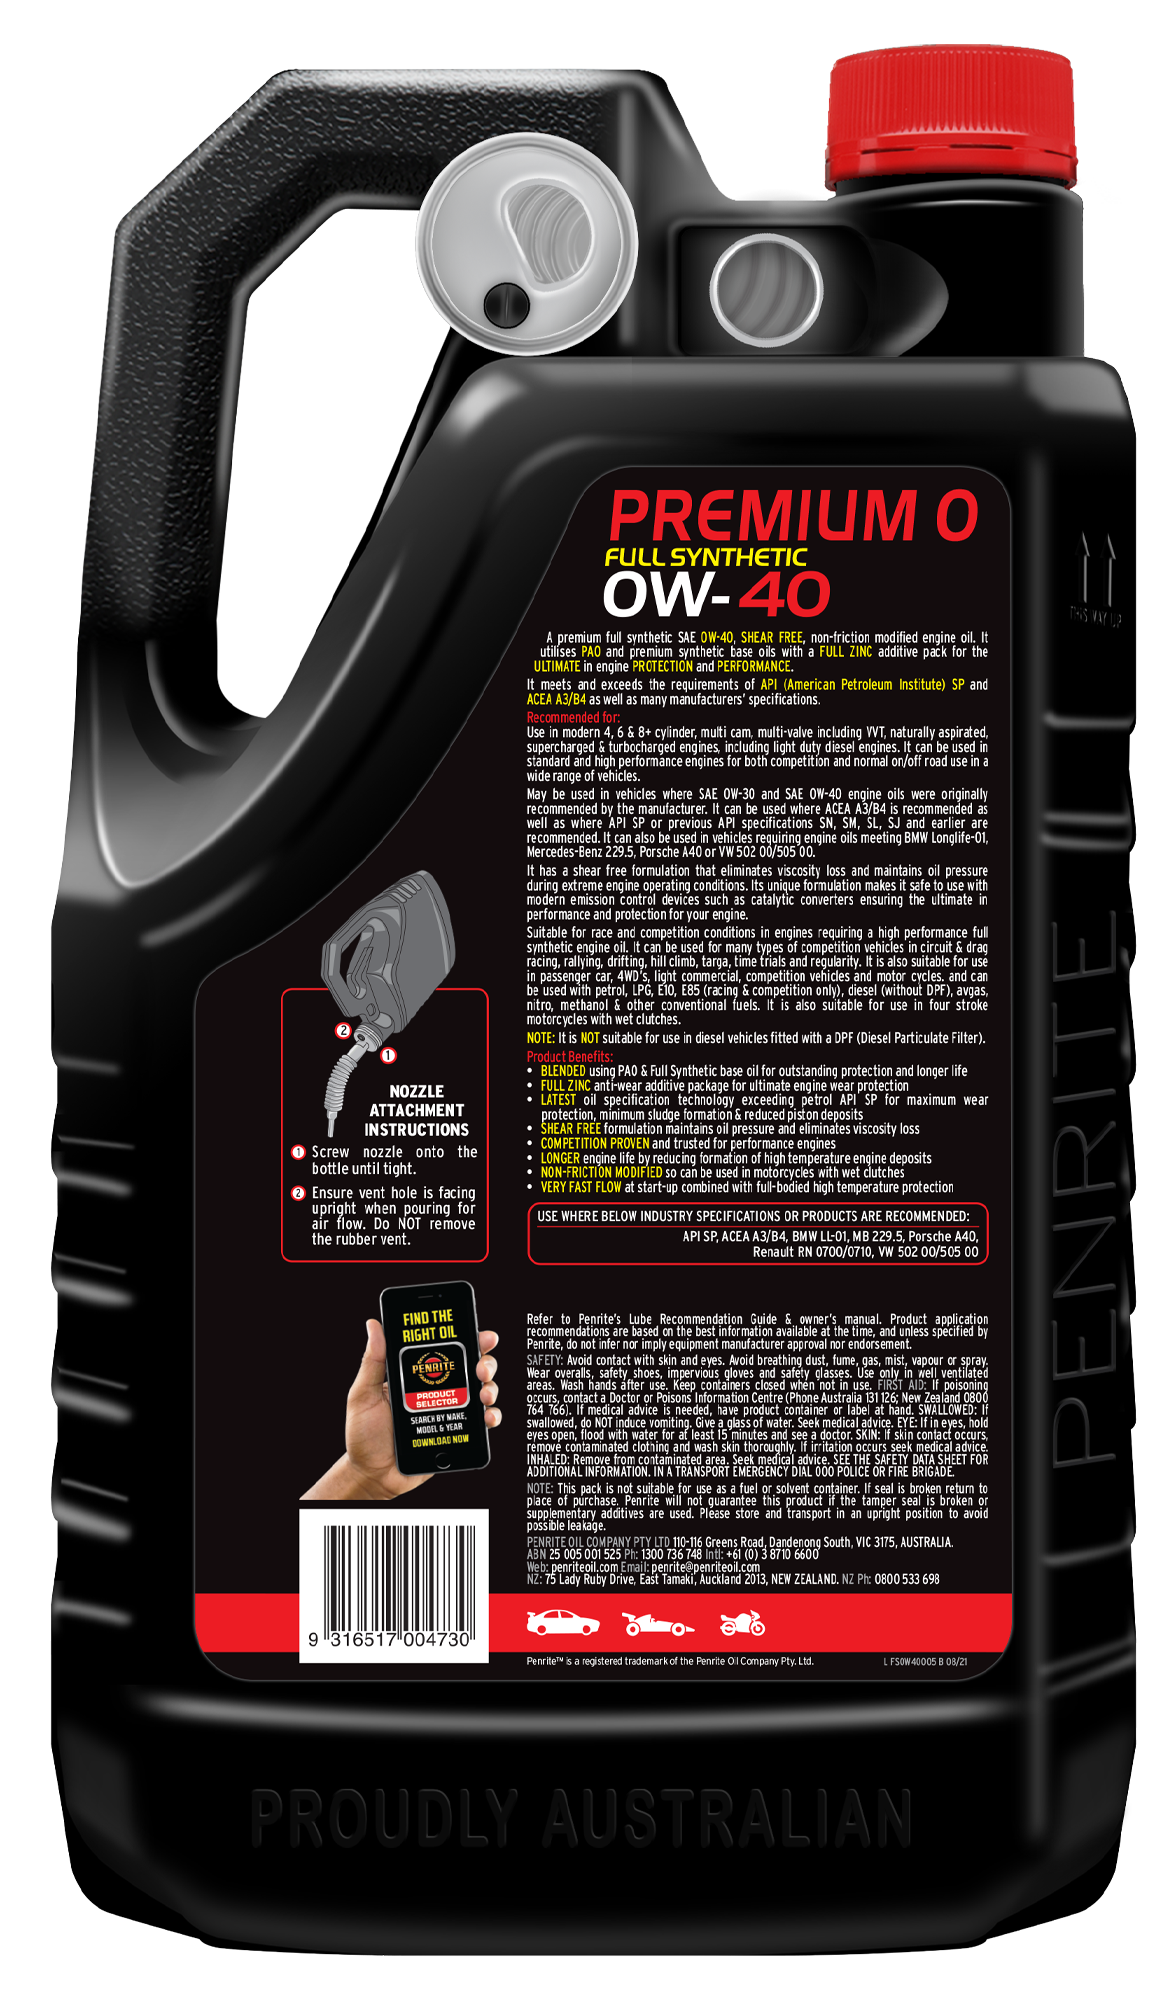 10 Tenth Premium 0W-40 (Full Synthetic) - Penrite | Universal Auto Spares